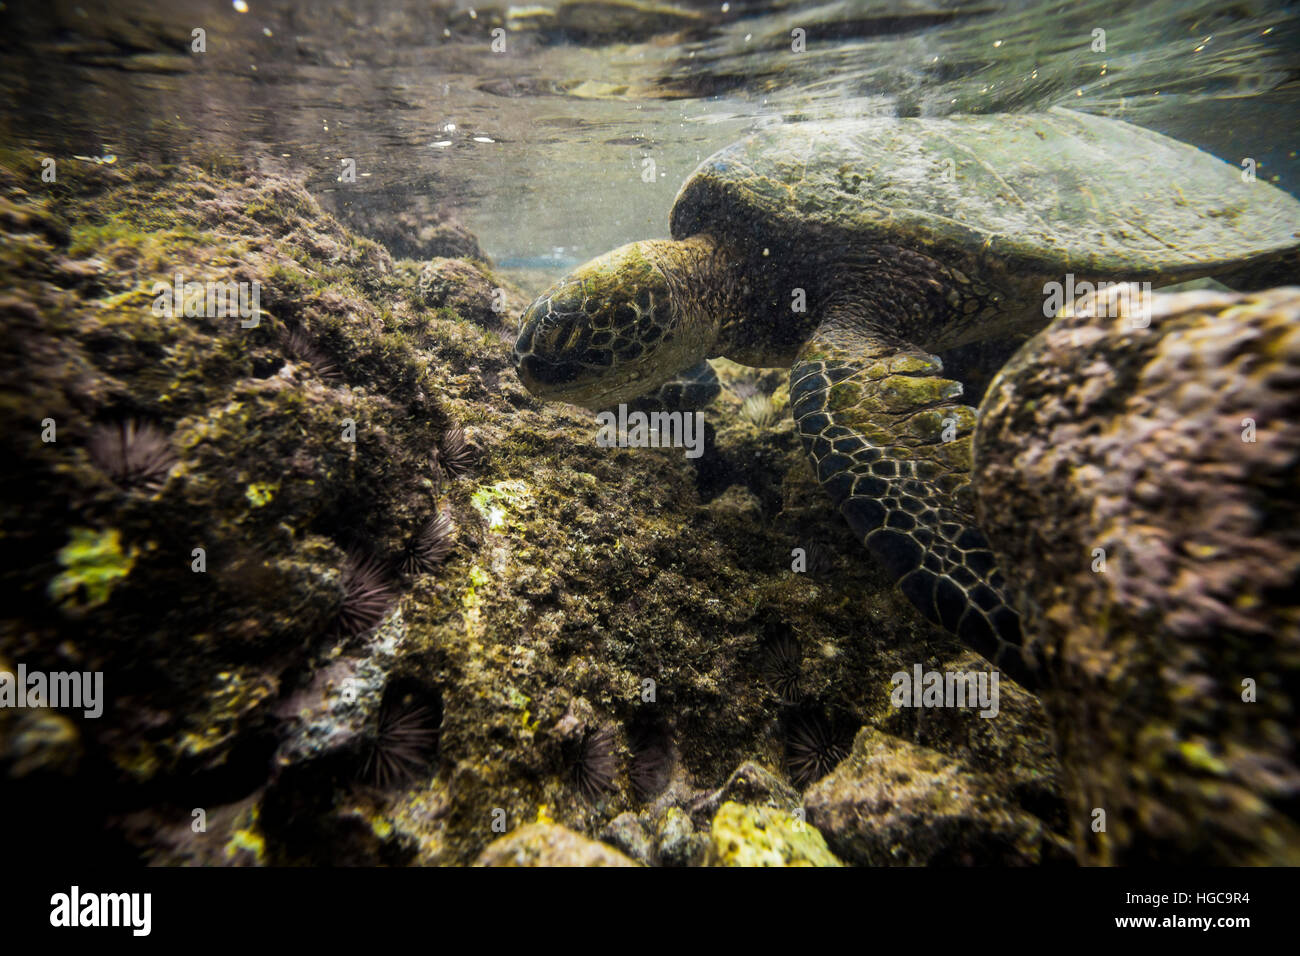 A green sea turtle or Chelonia mydas, eating algae in a shallow tide pool on The Big Island, Hawaii. Stock Photo